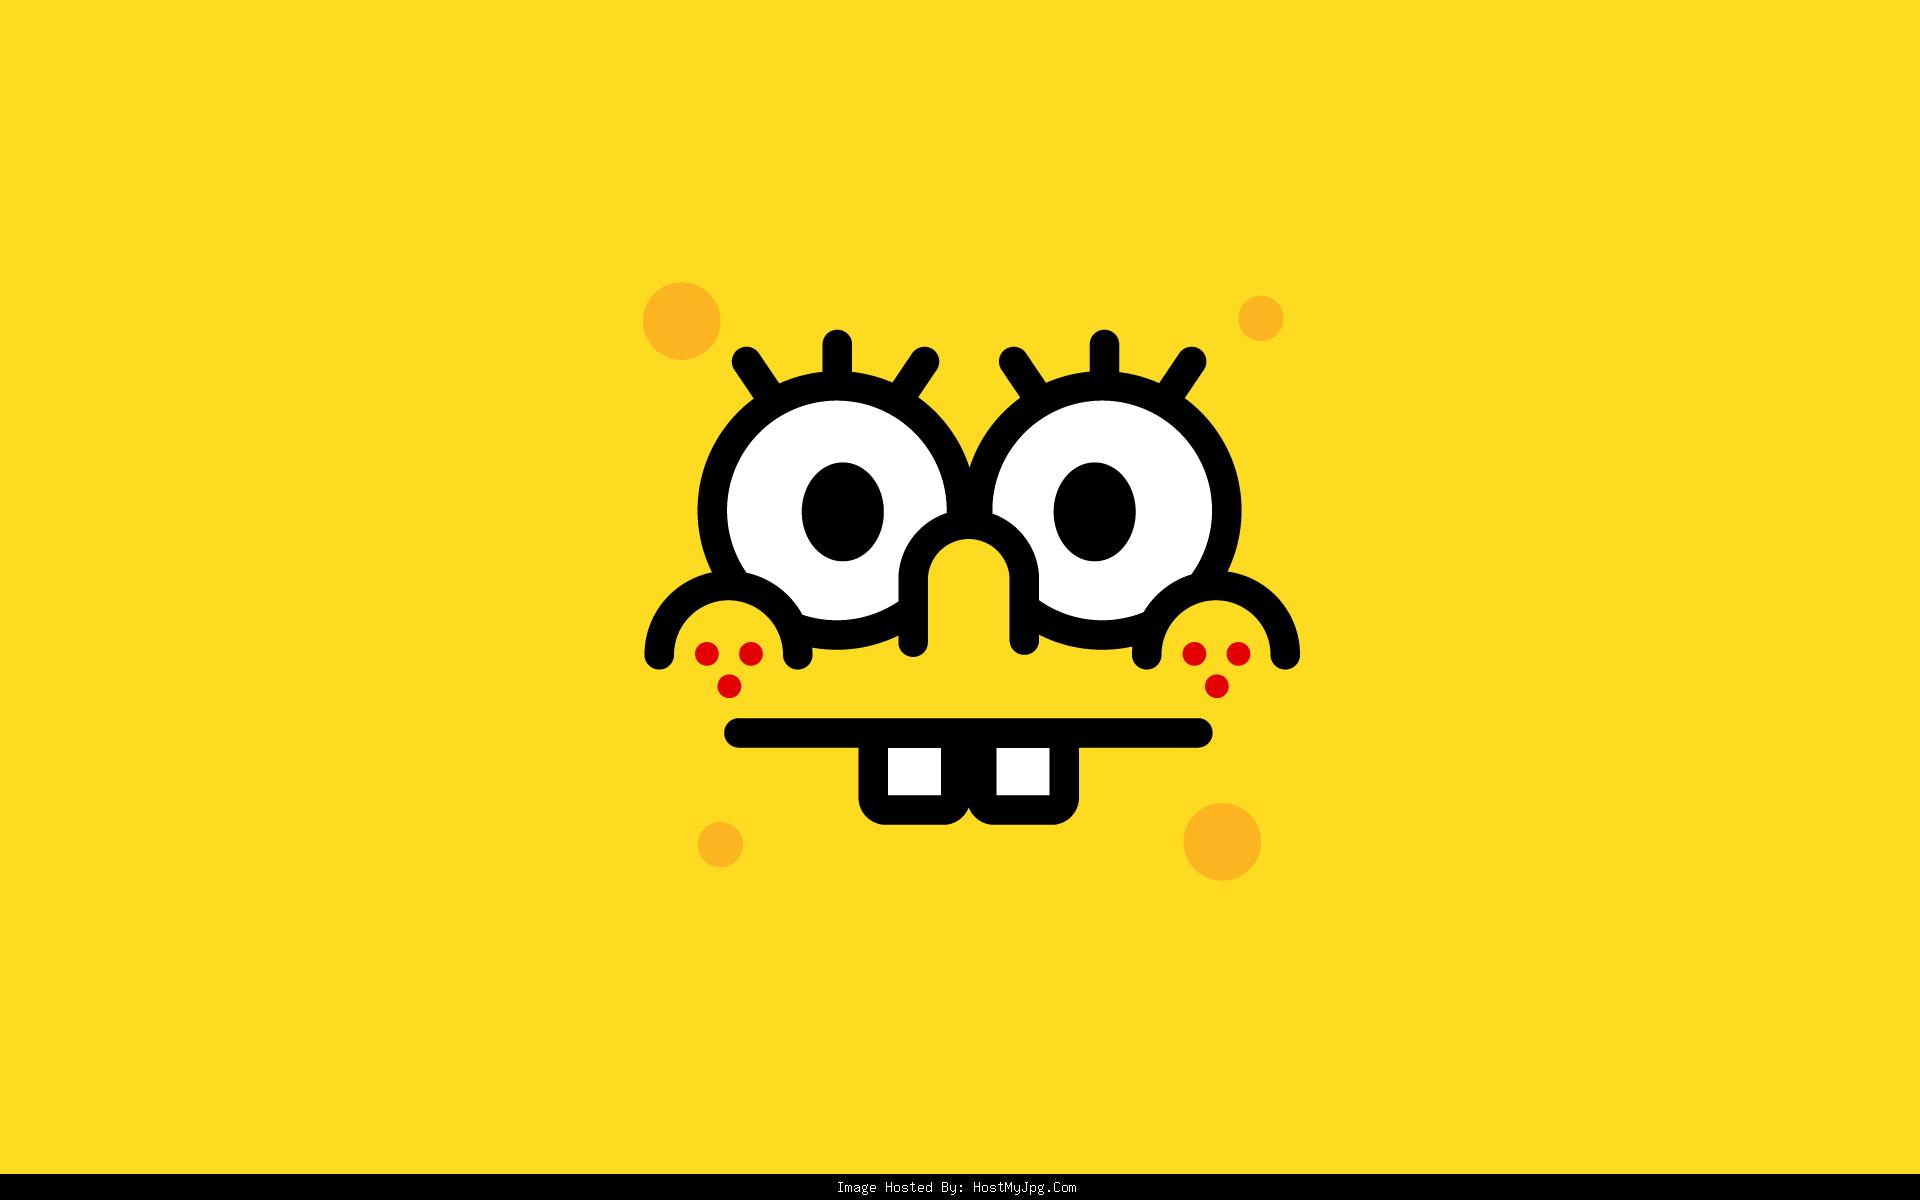 of Spongebob 4K wallpaper for your desktop or mobile screen